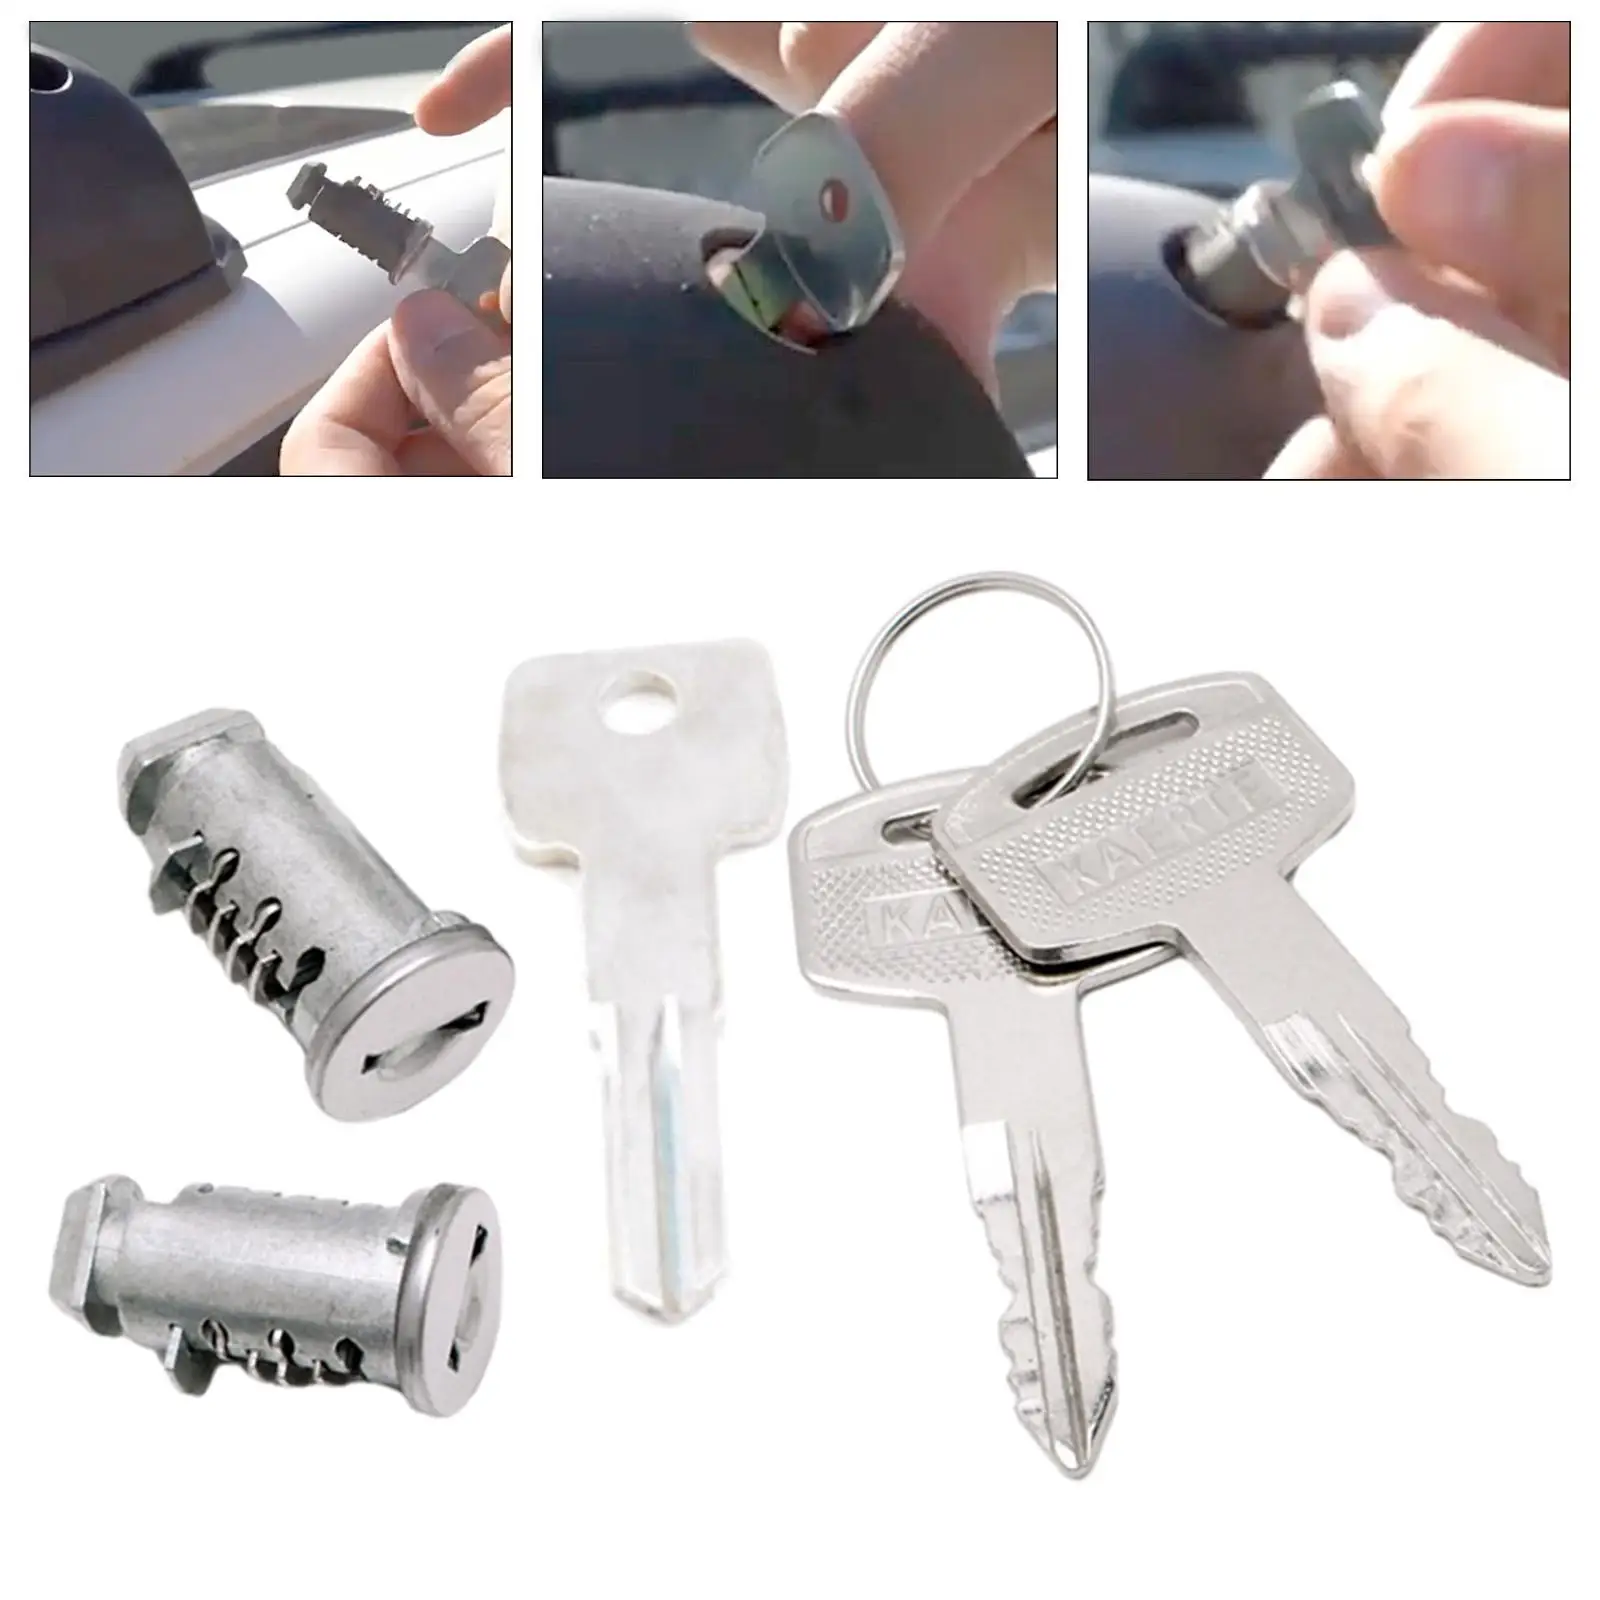 2 Pieces Lock Cylindes Cross Bars Locks and Key Kit for Car Rack Locks